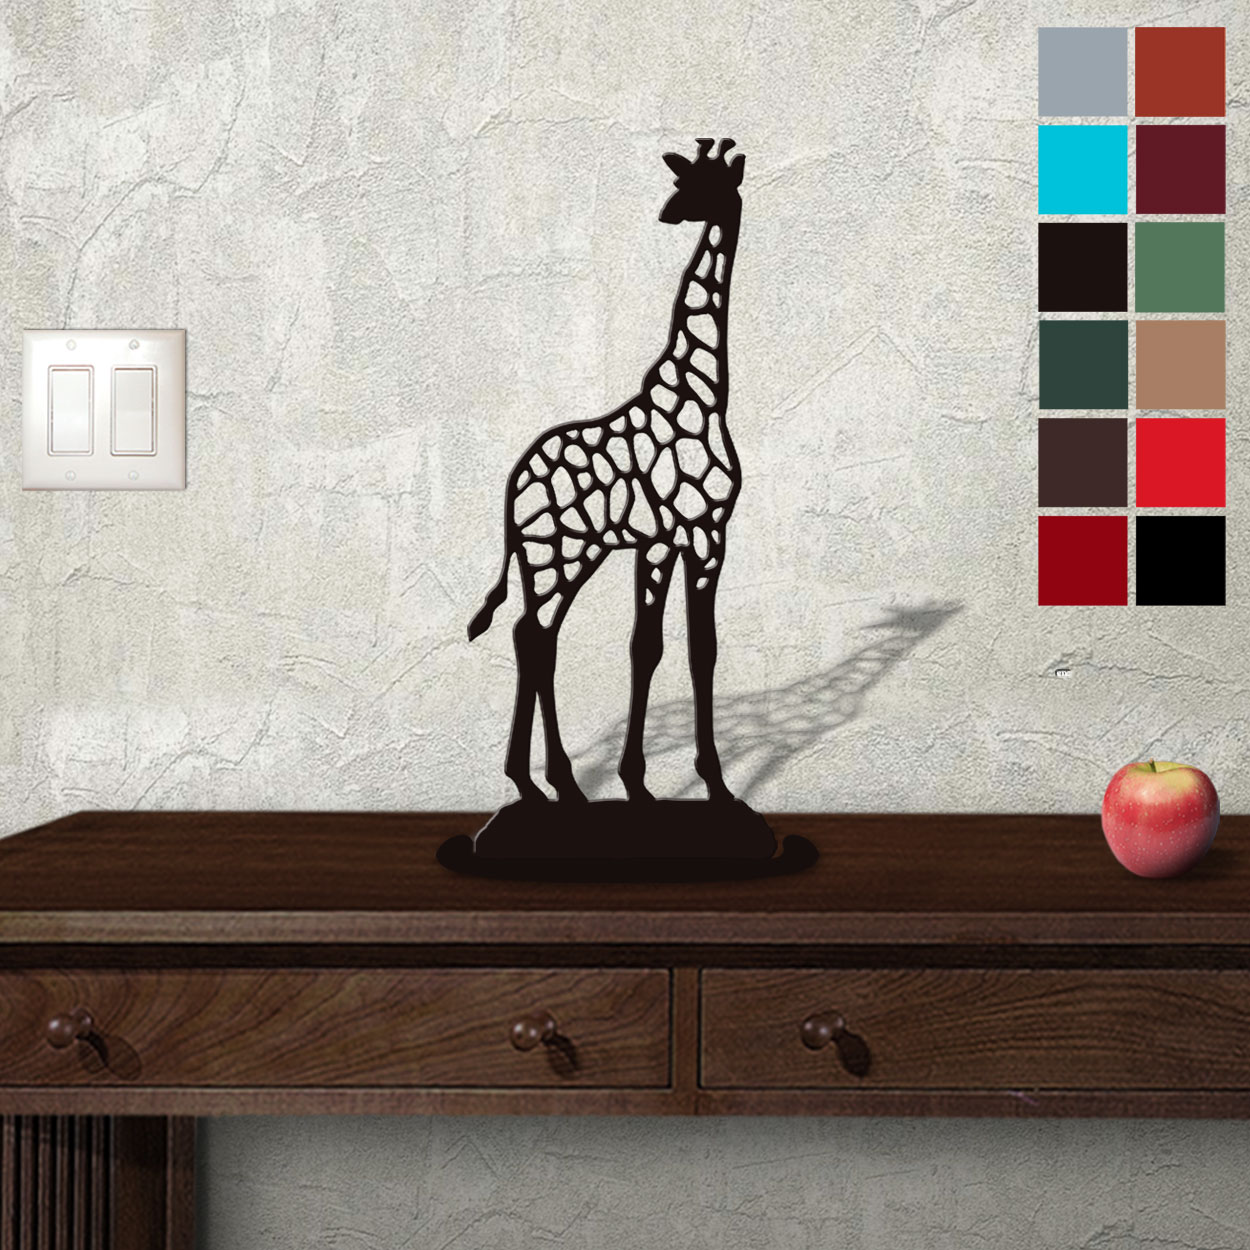 623425 - Tabletop Metal Sculpture - 8in W x 18in H - Giraffe - Choose Color